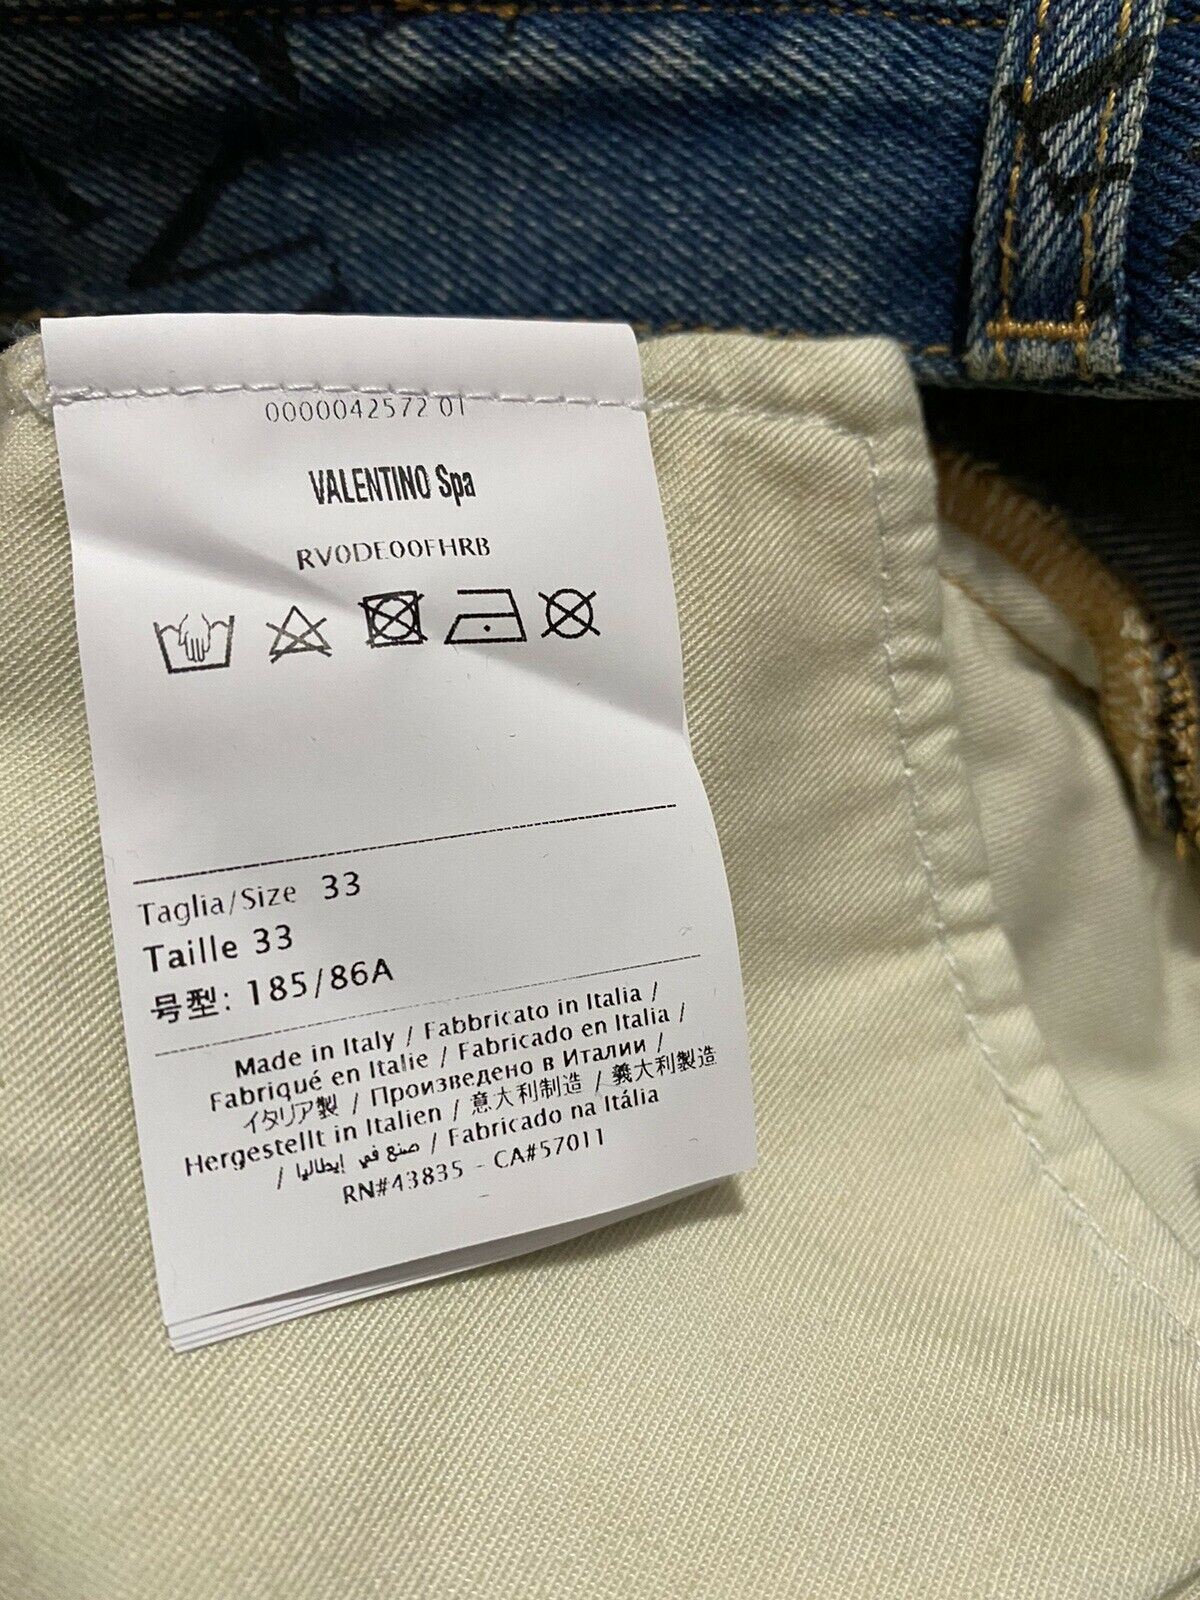 Neu mit Etikett: 995 $ Valentino Herren Straight-Flat Logo Cuffed Jeans Hose Blau 34 US (50 Eu)